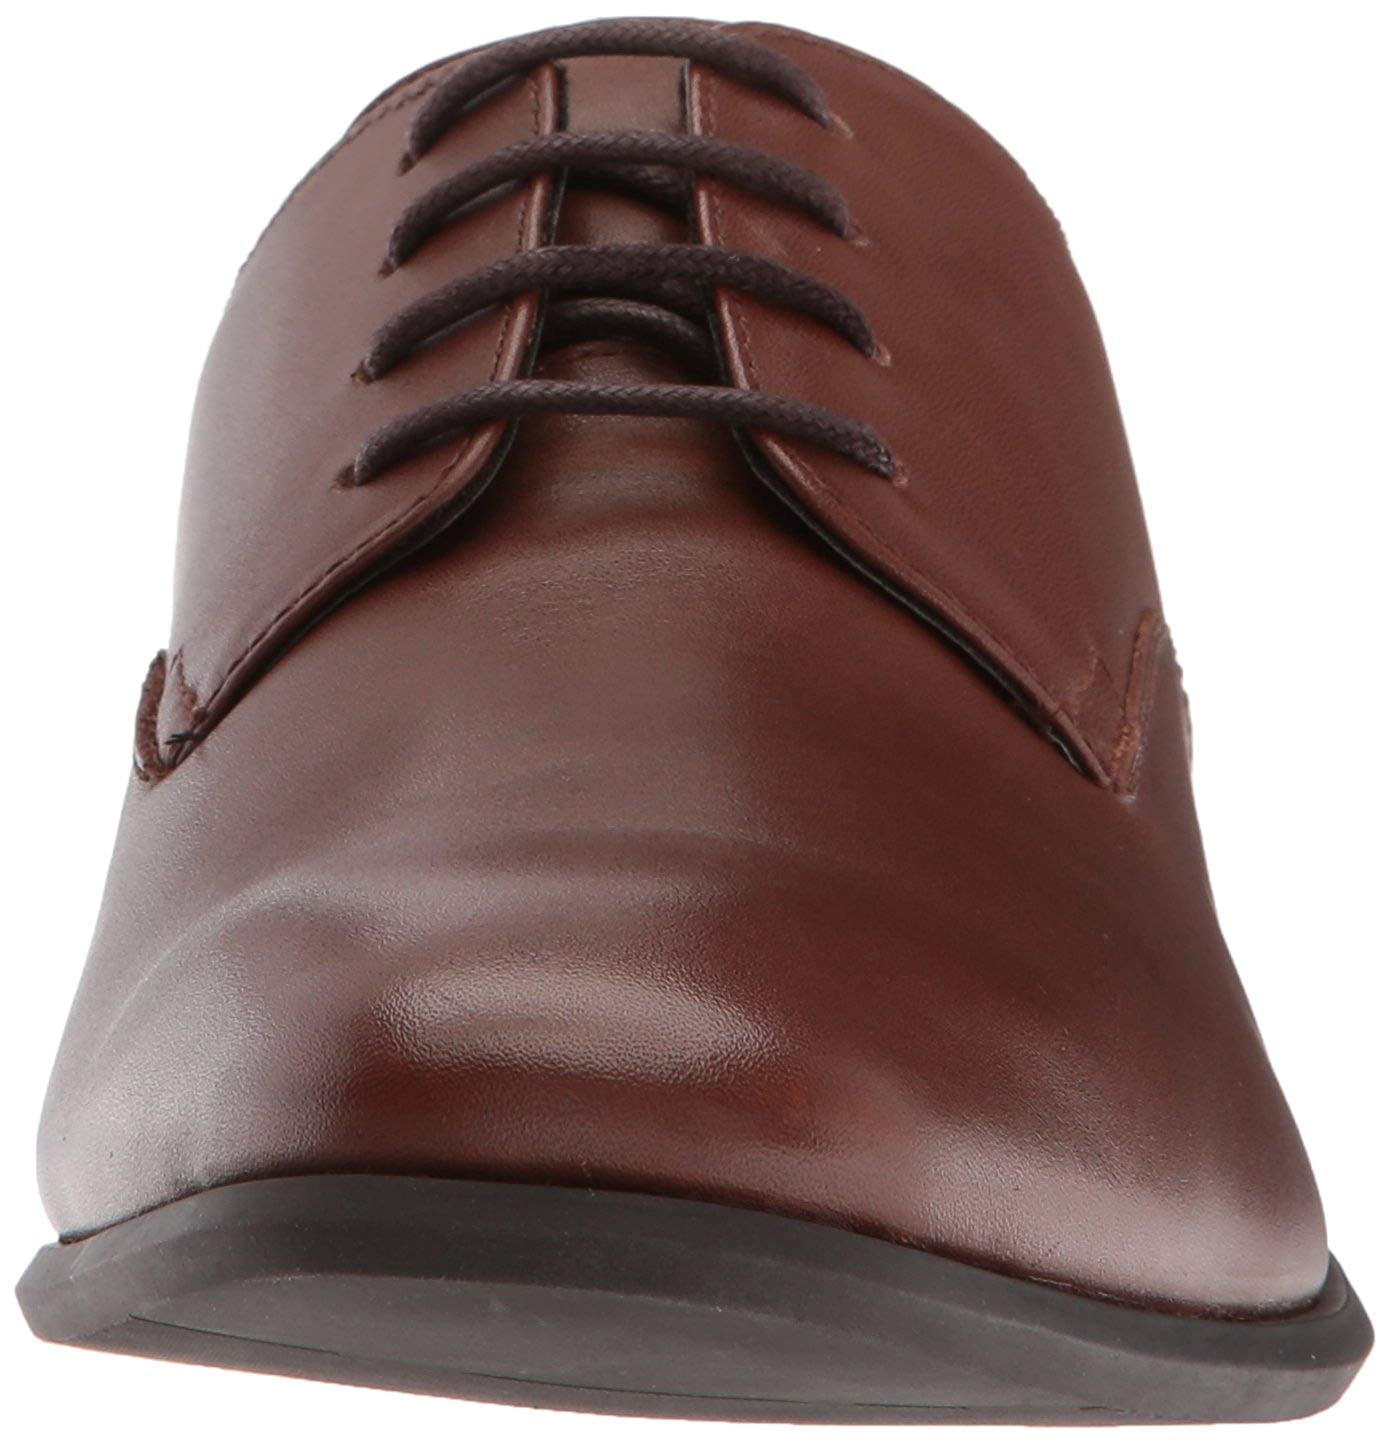 calvin klein men's lucca leather dress shoes